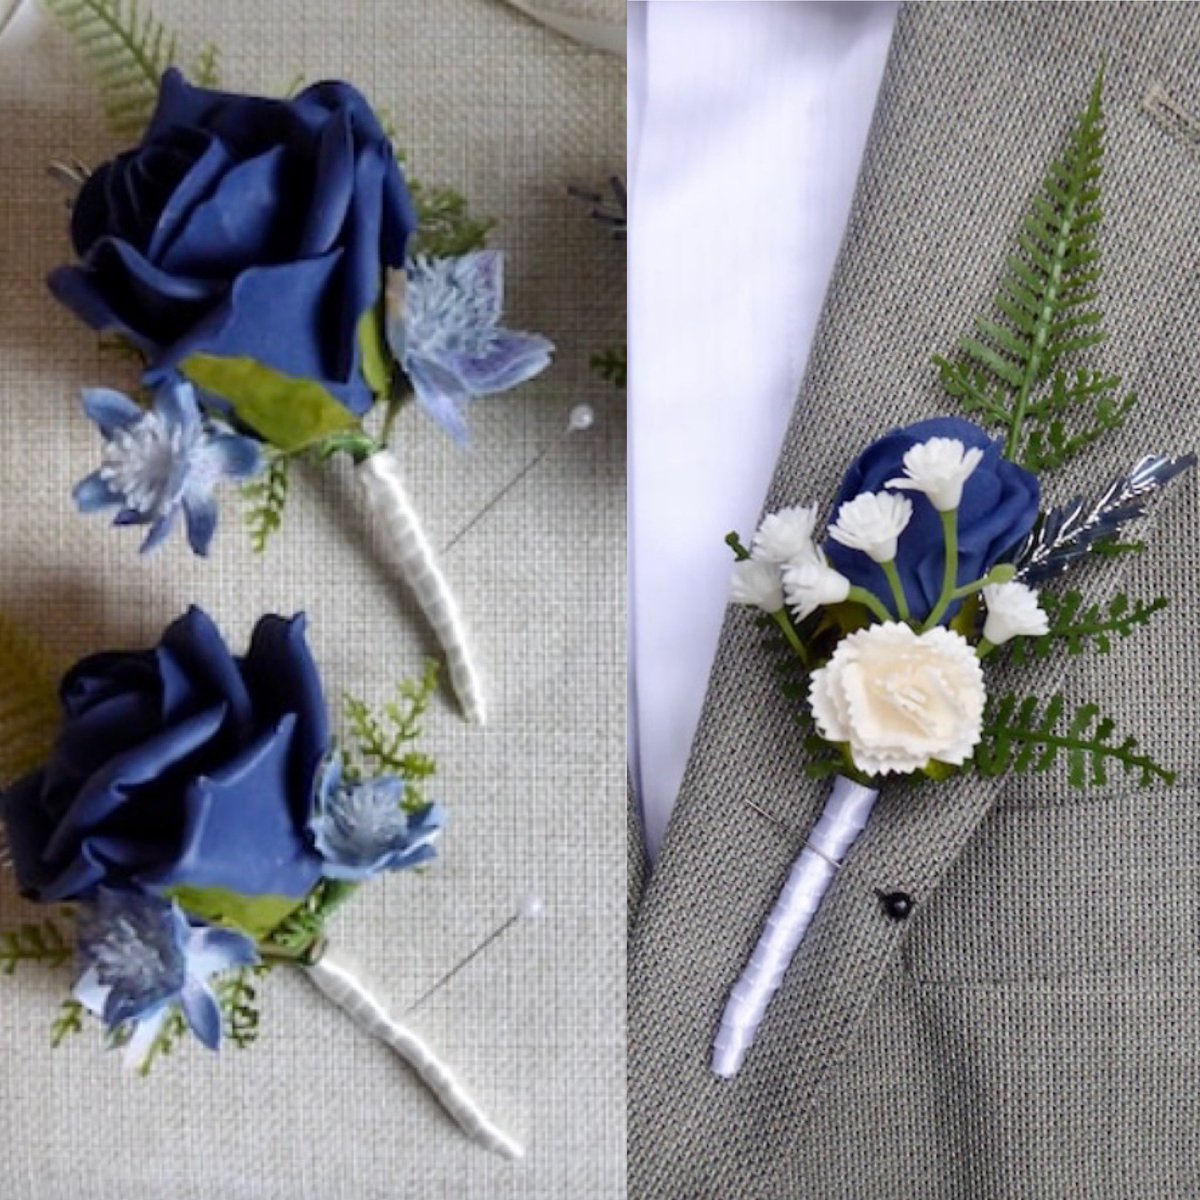 Navy blue buttonholes/corsages 

#wedding #Raceday #formalevent #horsetrials #ladiesday #specialoccasion #weddingguest #flowers #keepsake #buttonhole #corsage #smallbiz #EtsyHandmade #FloweryWonder #bridalflowers #navy #weddingday #corsage